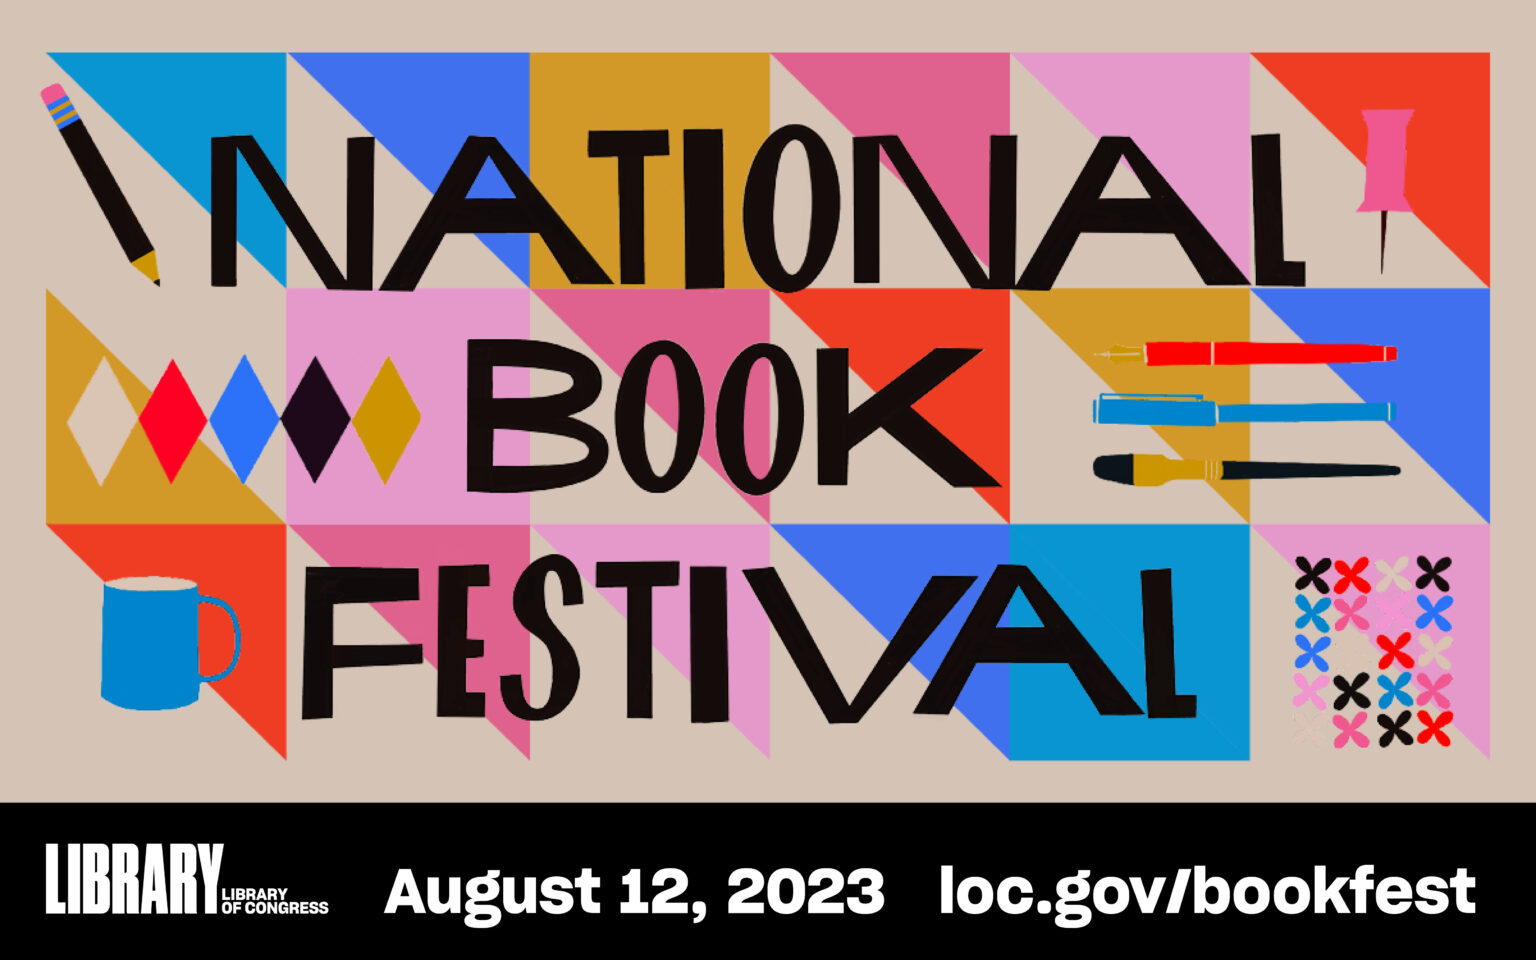 The 2023 National Book Festival The Romance Studio